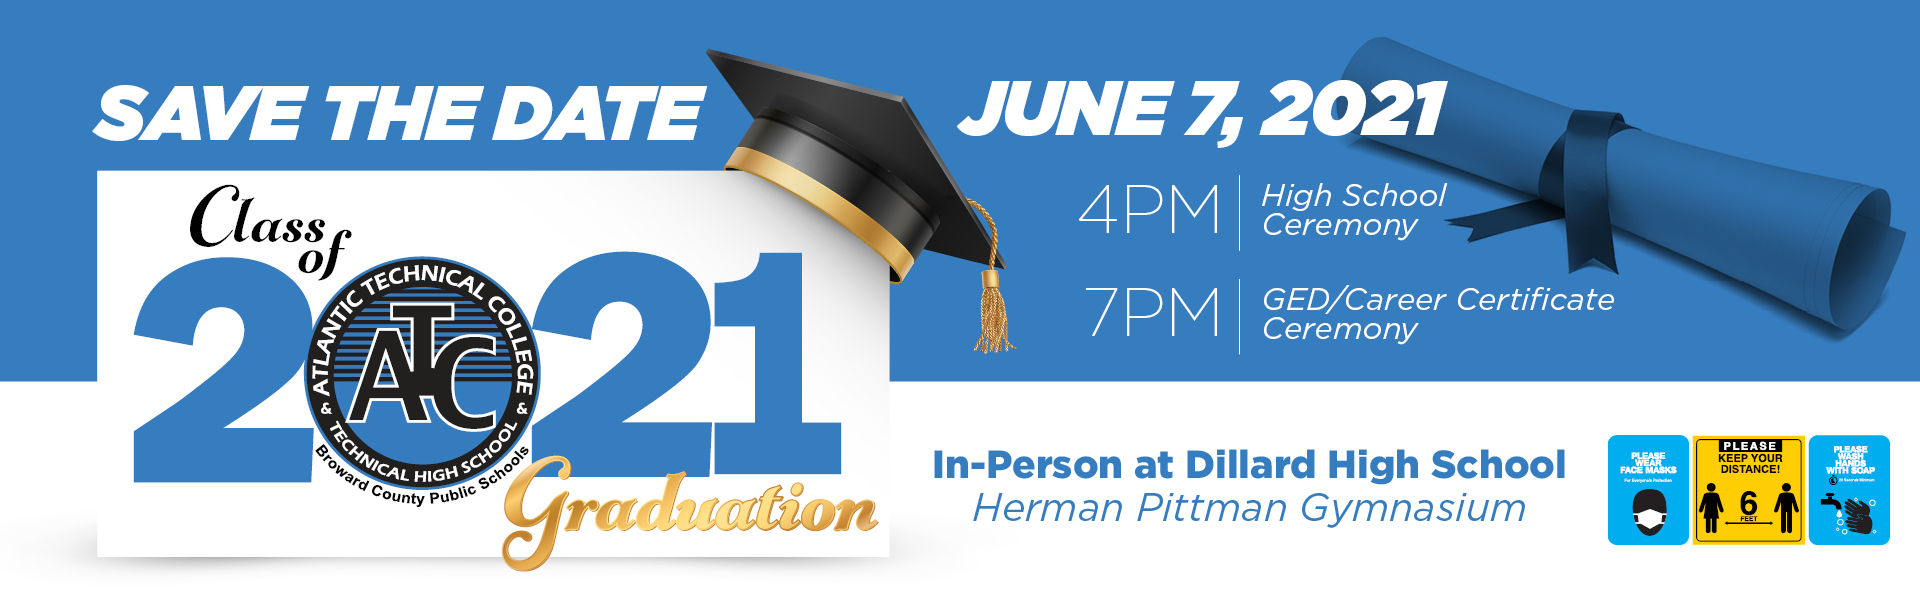 Graduation June 7 in person at Dillard High